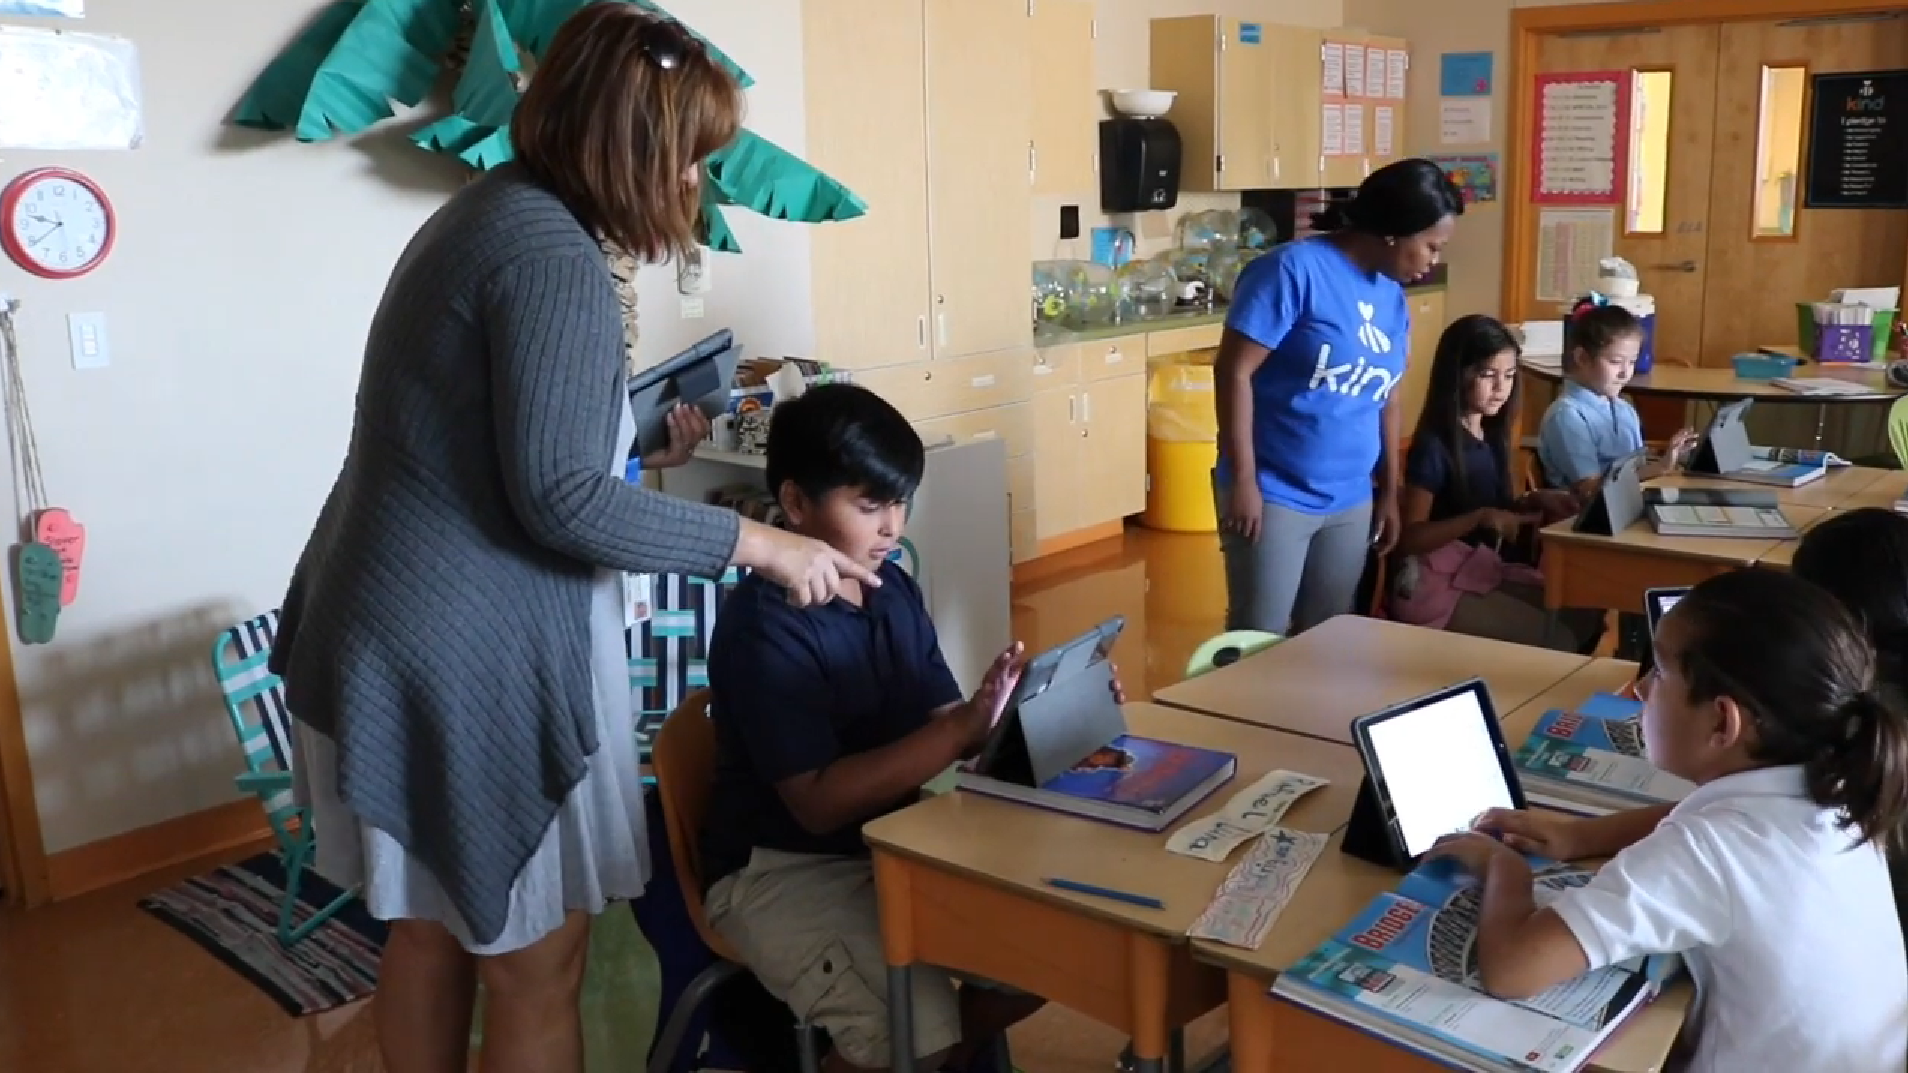 Pendergast小学教师Lisa Slover和Michelle Longmire帮助三年级的学生在课堂上致力于课程。照片礼貌劳伦·黑人/ Azednews